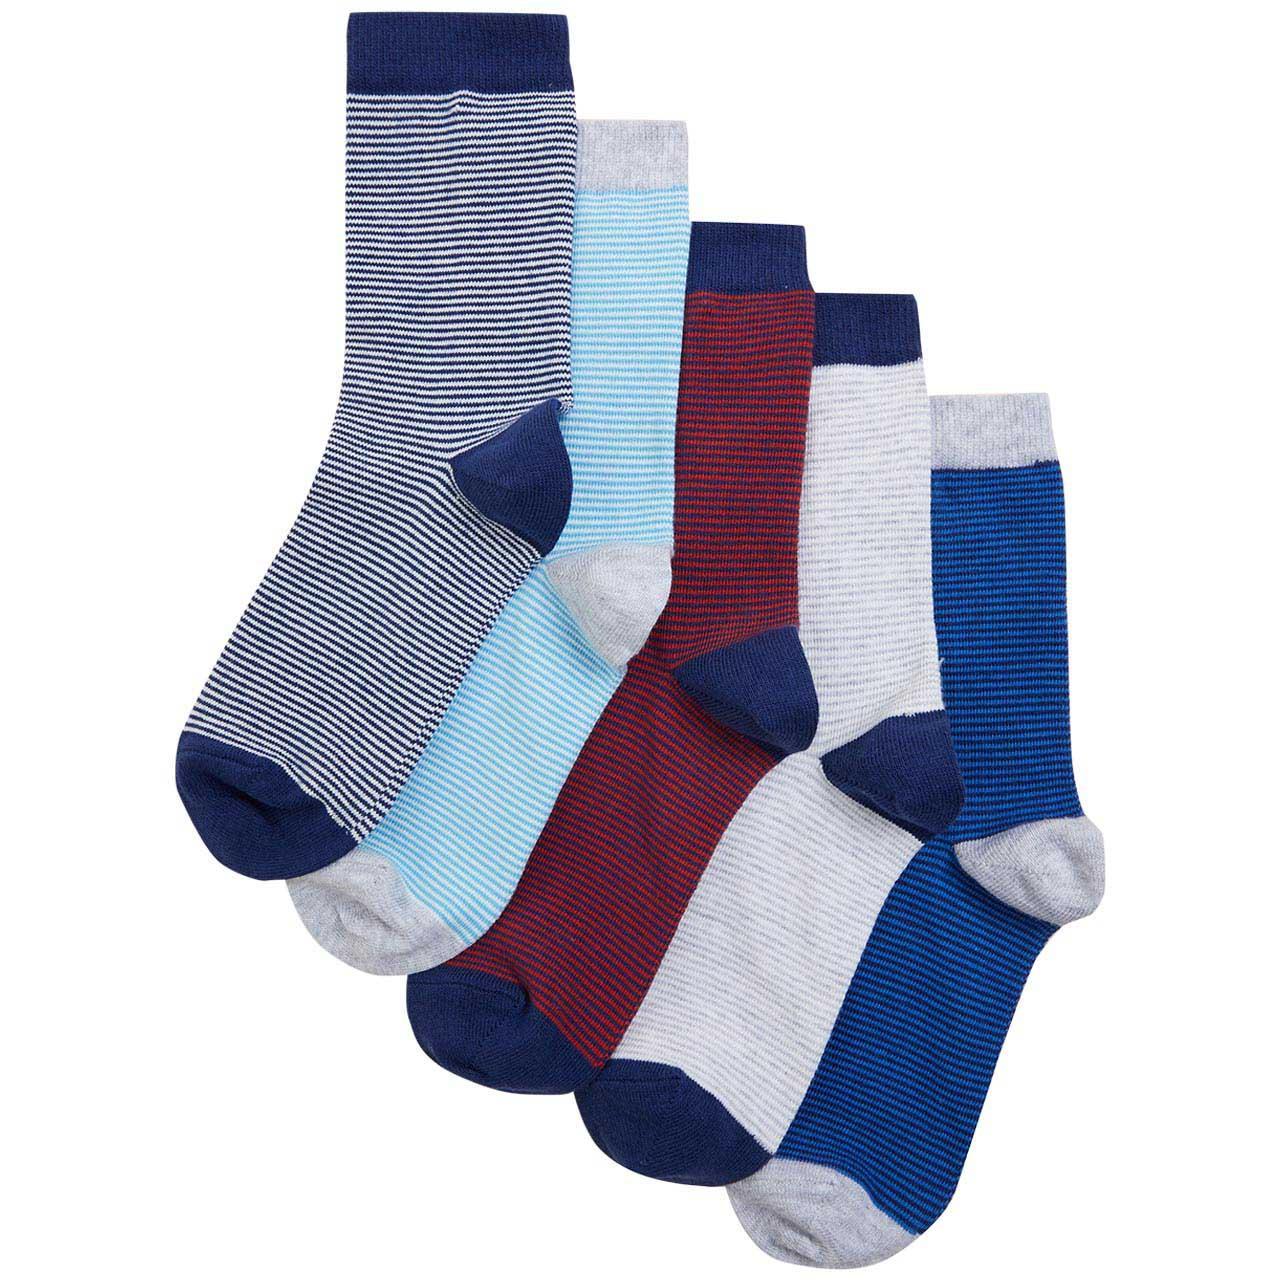 M&S Cotton Rich Striped Socks, 5 pack, 12-3